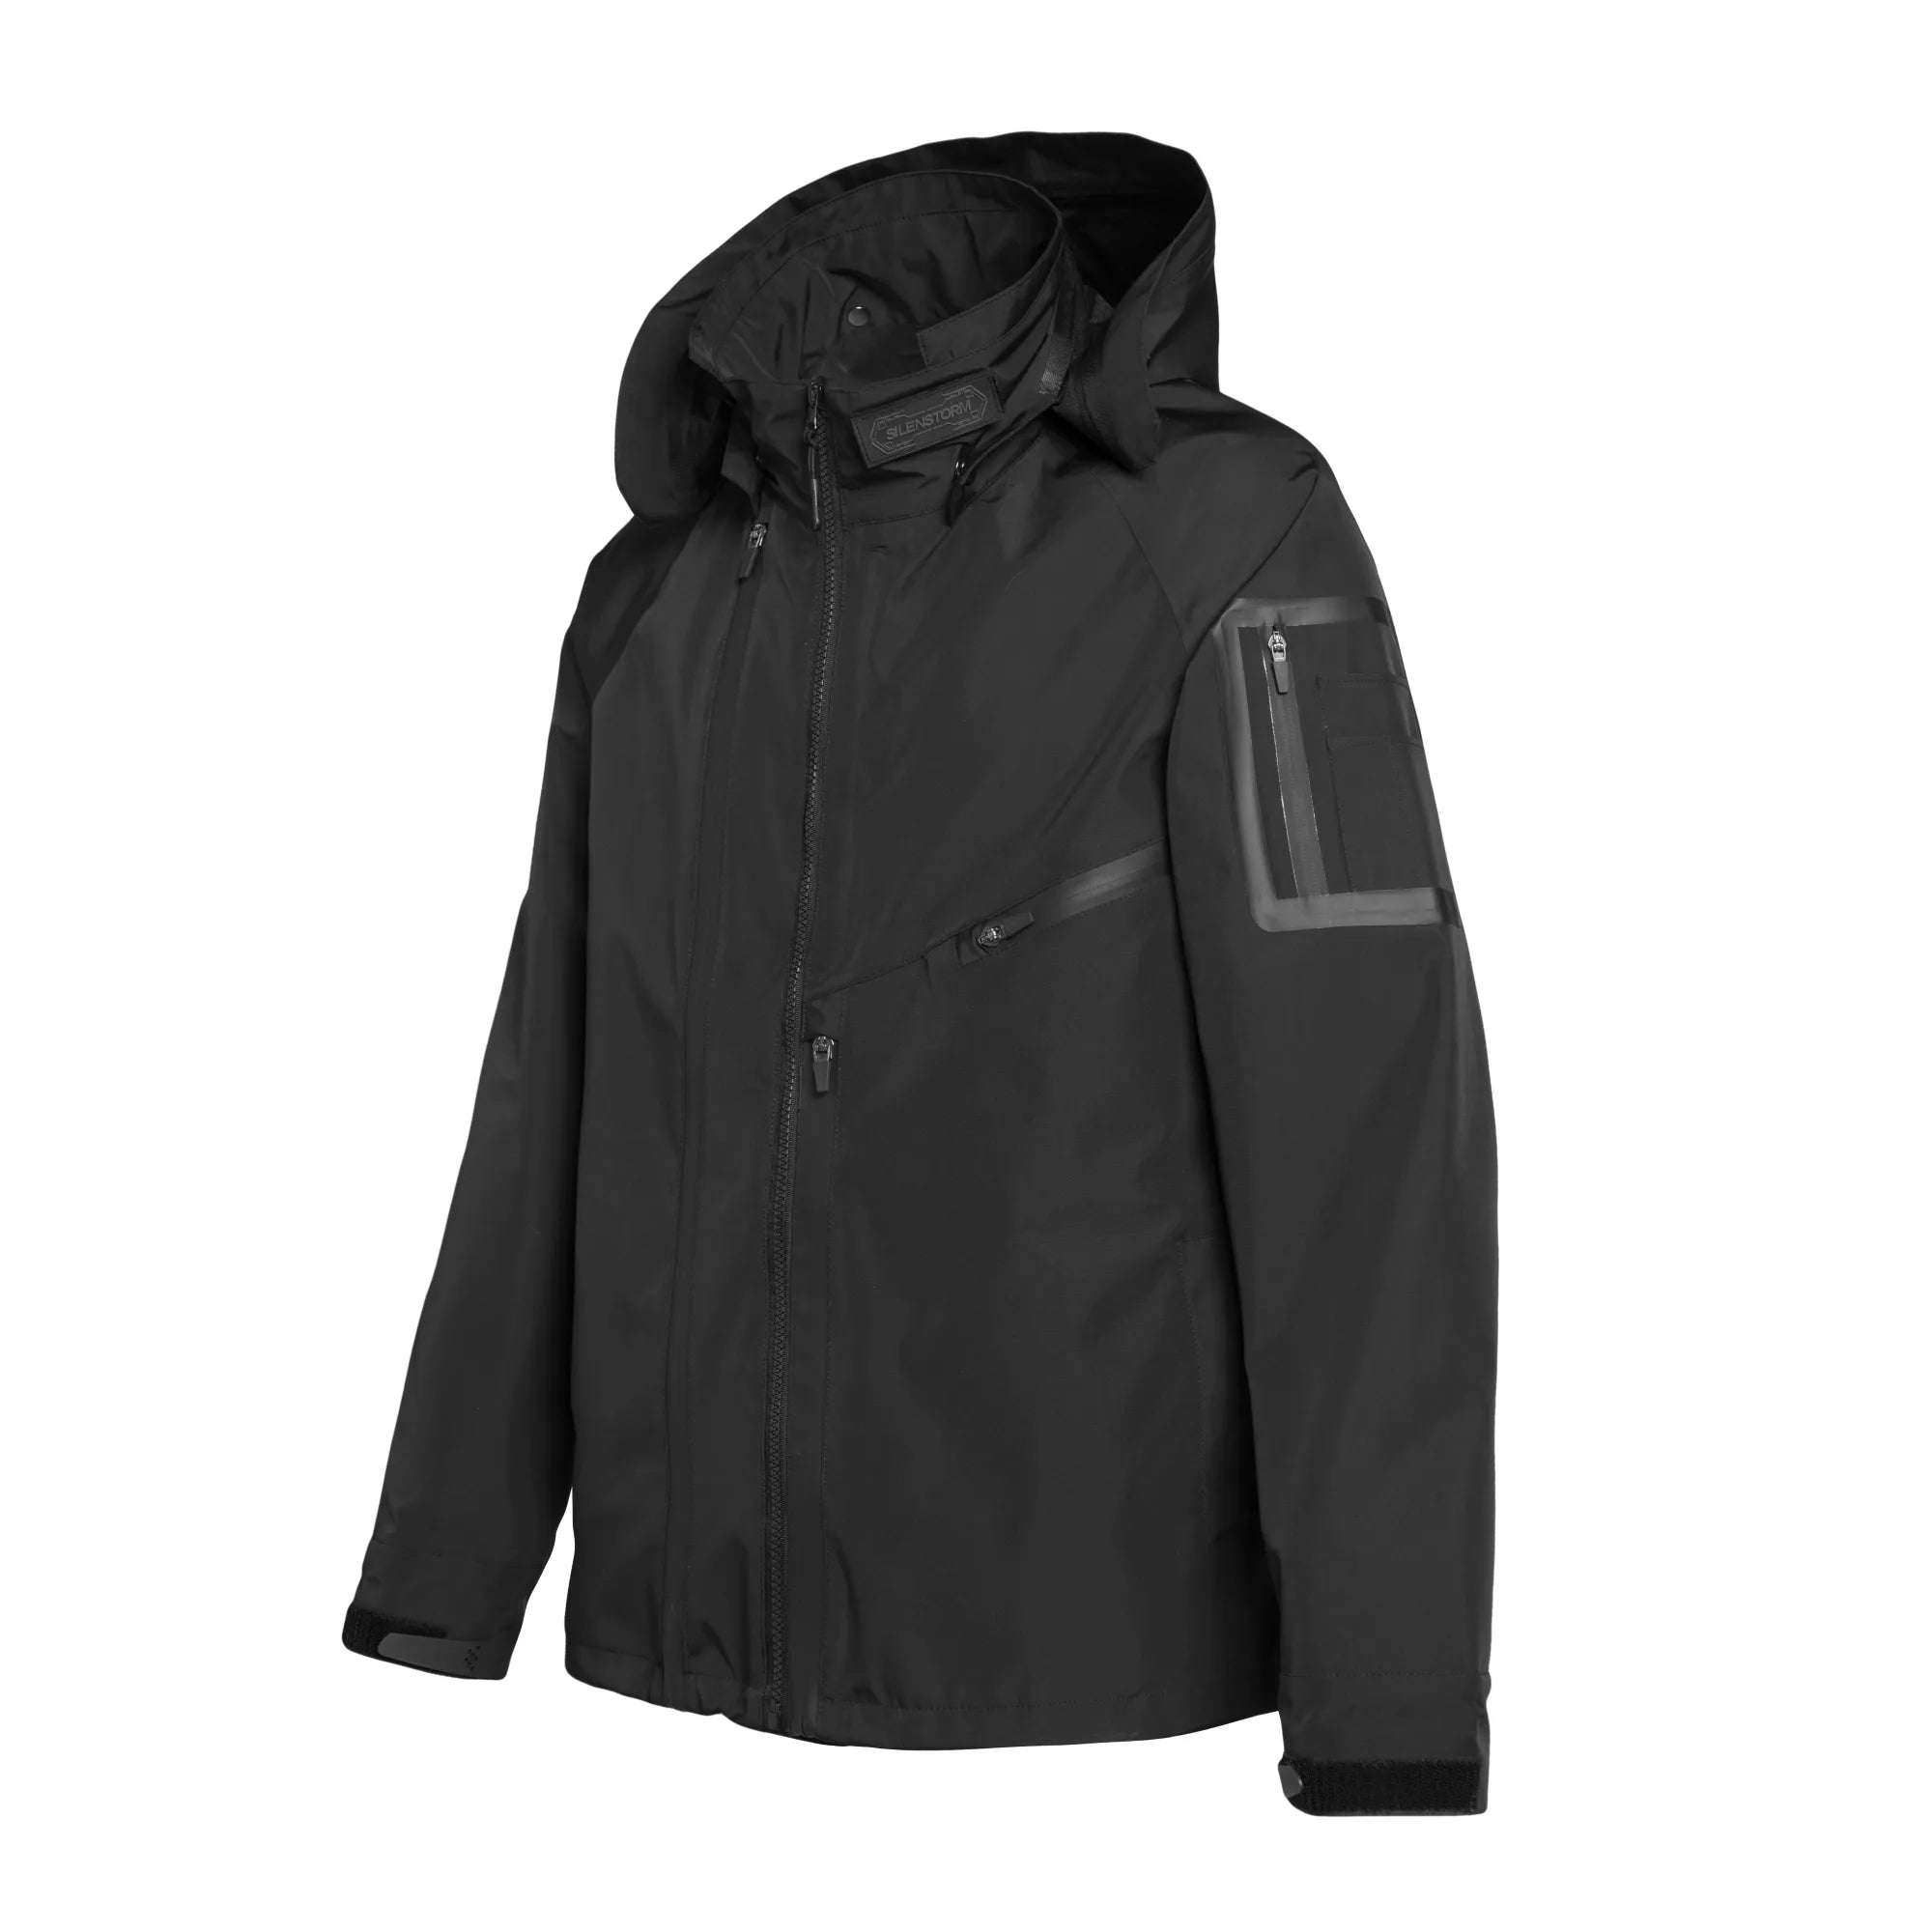 Functional stormsuit jacket detachable hood waterproof silenstorm techwear ninjawear darkwear streetwear aesthetic  futuristic